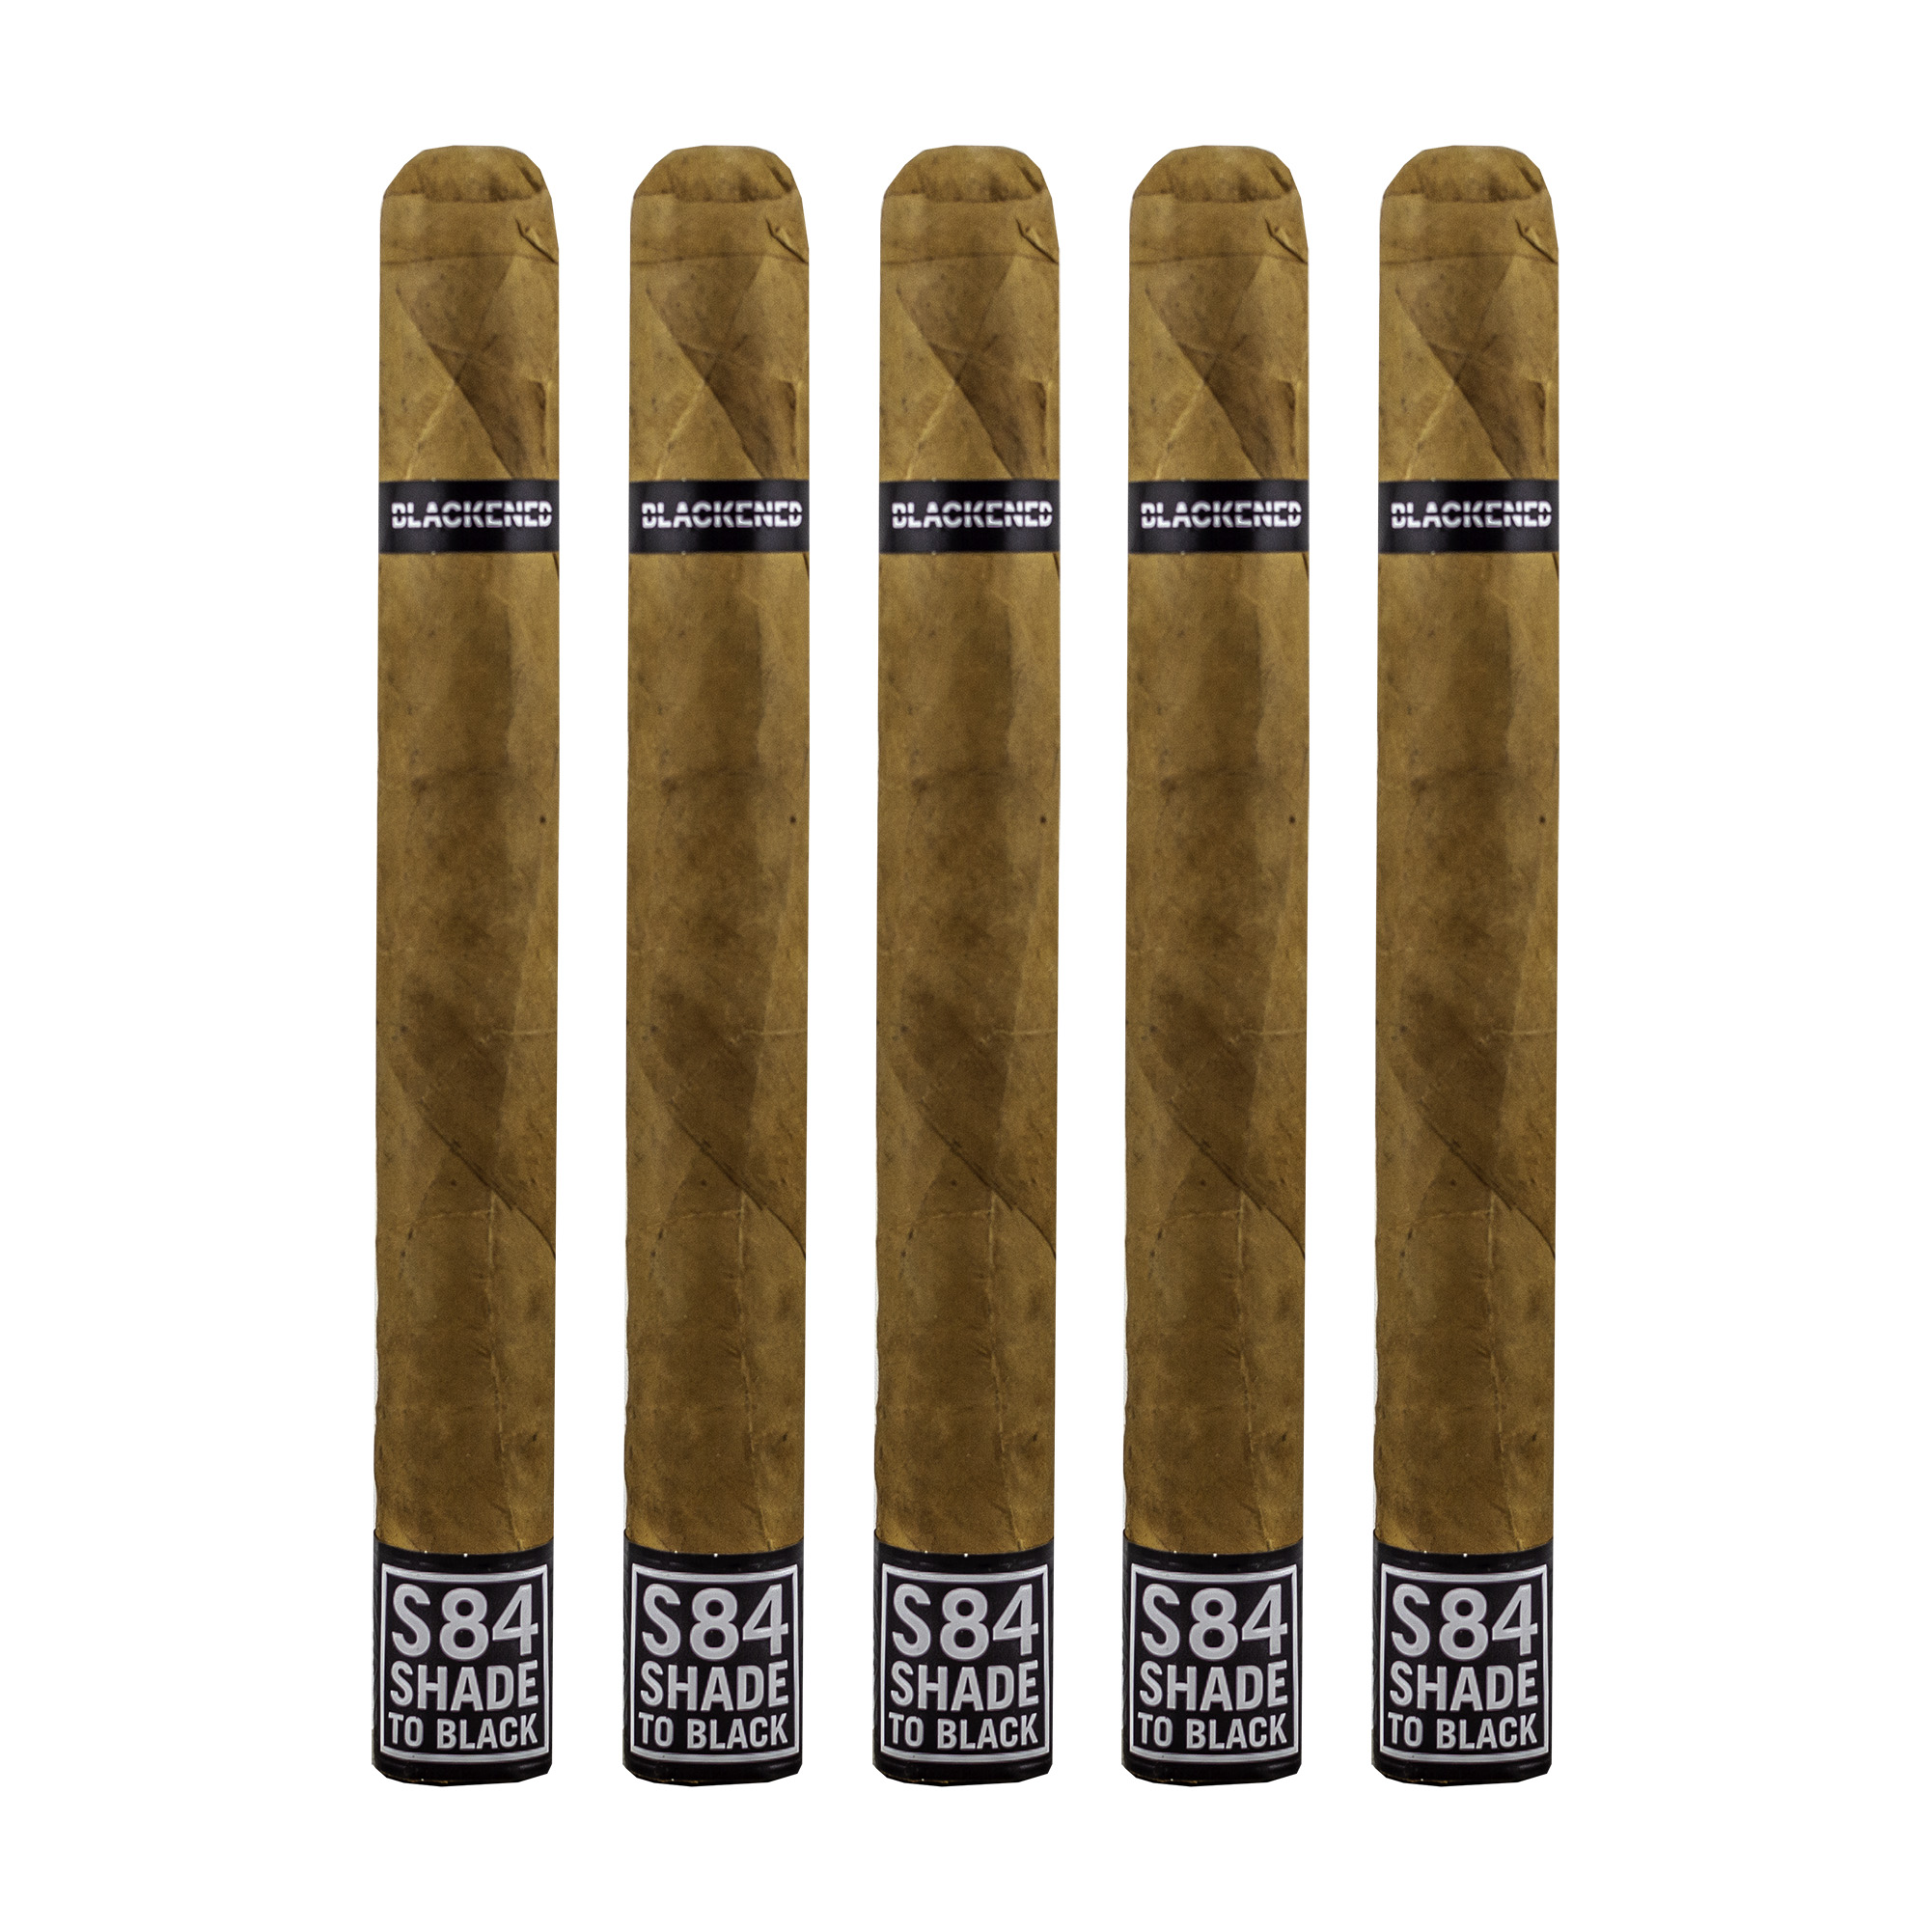 Blackened S84 Corona Doble Cigar - 5 Pack